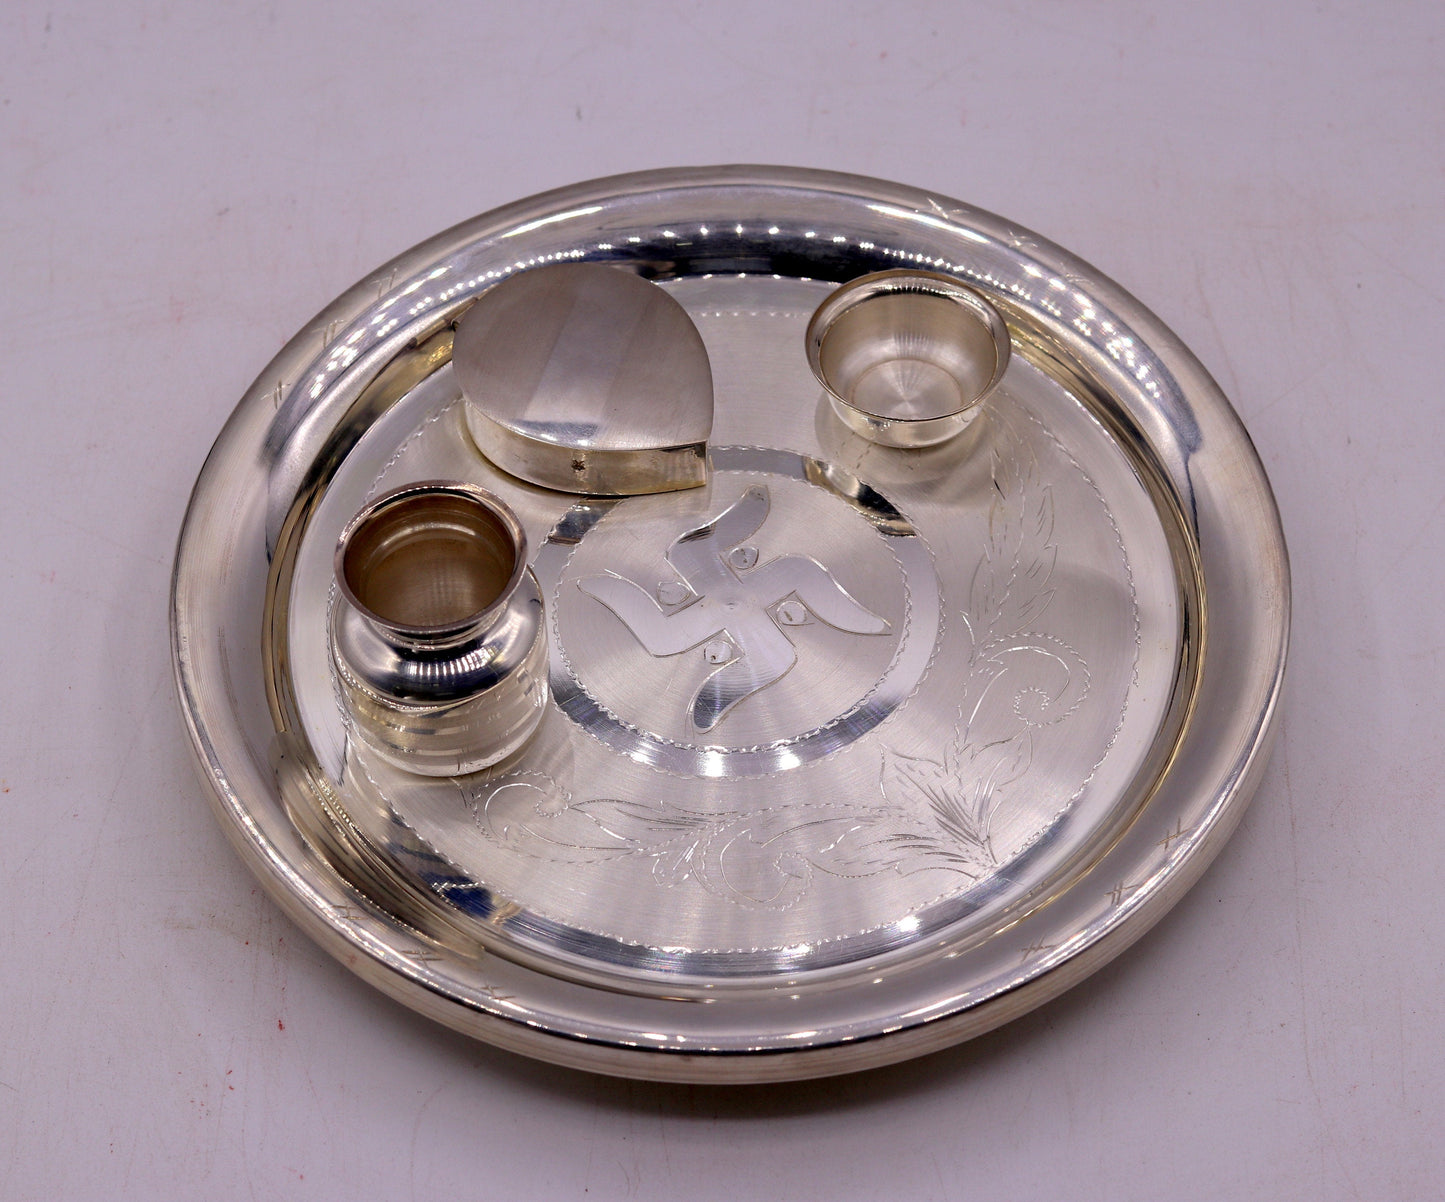 999 fine pure sterling silver handmade plate Puja Thali excellent design plane Puja plate tray  for Home temple decor art Arti vessel sv01 - TRIBAL ORNAMENTS